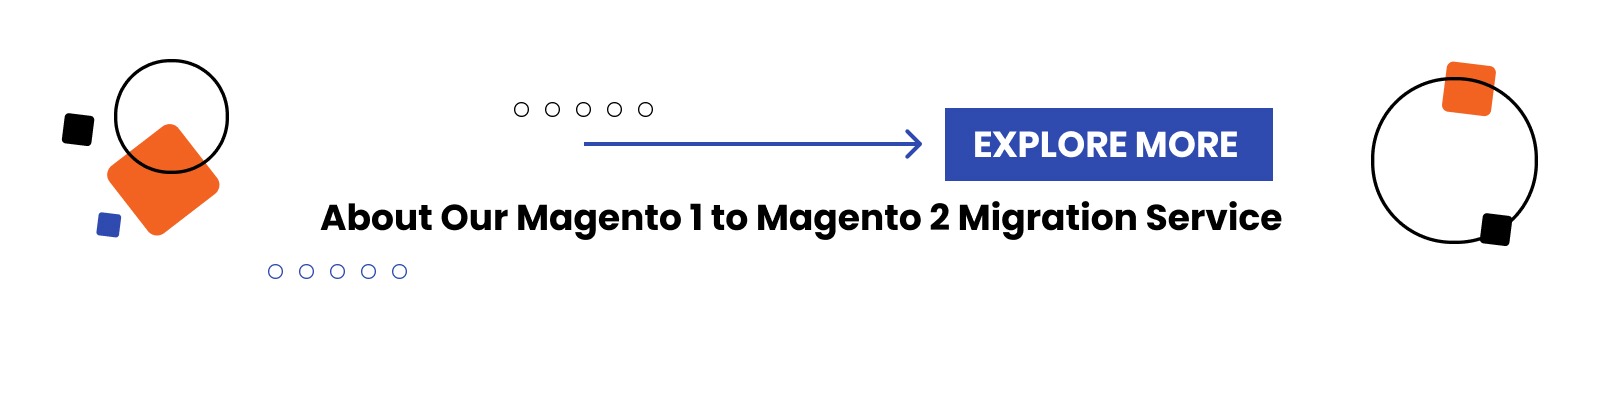 Magento 2 migration